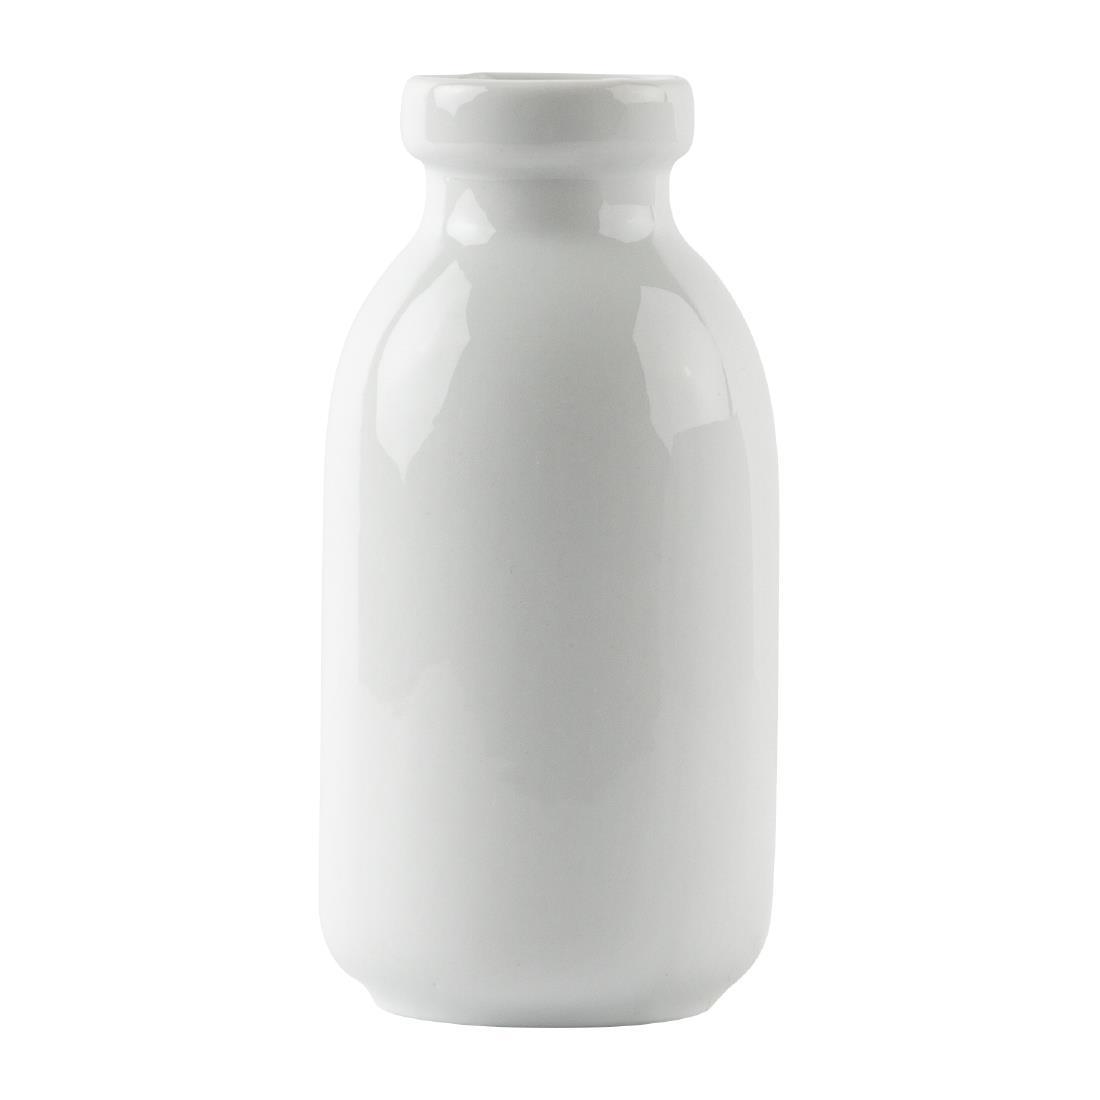 Olympia White Mini Milk Bottle 145ml (Pack of 12) - GM368  - 4